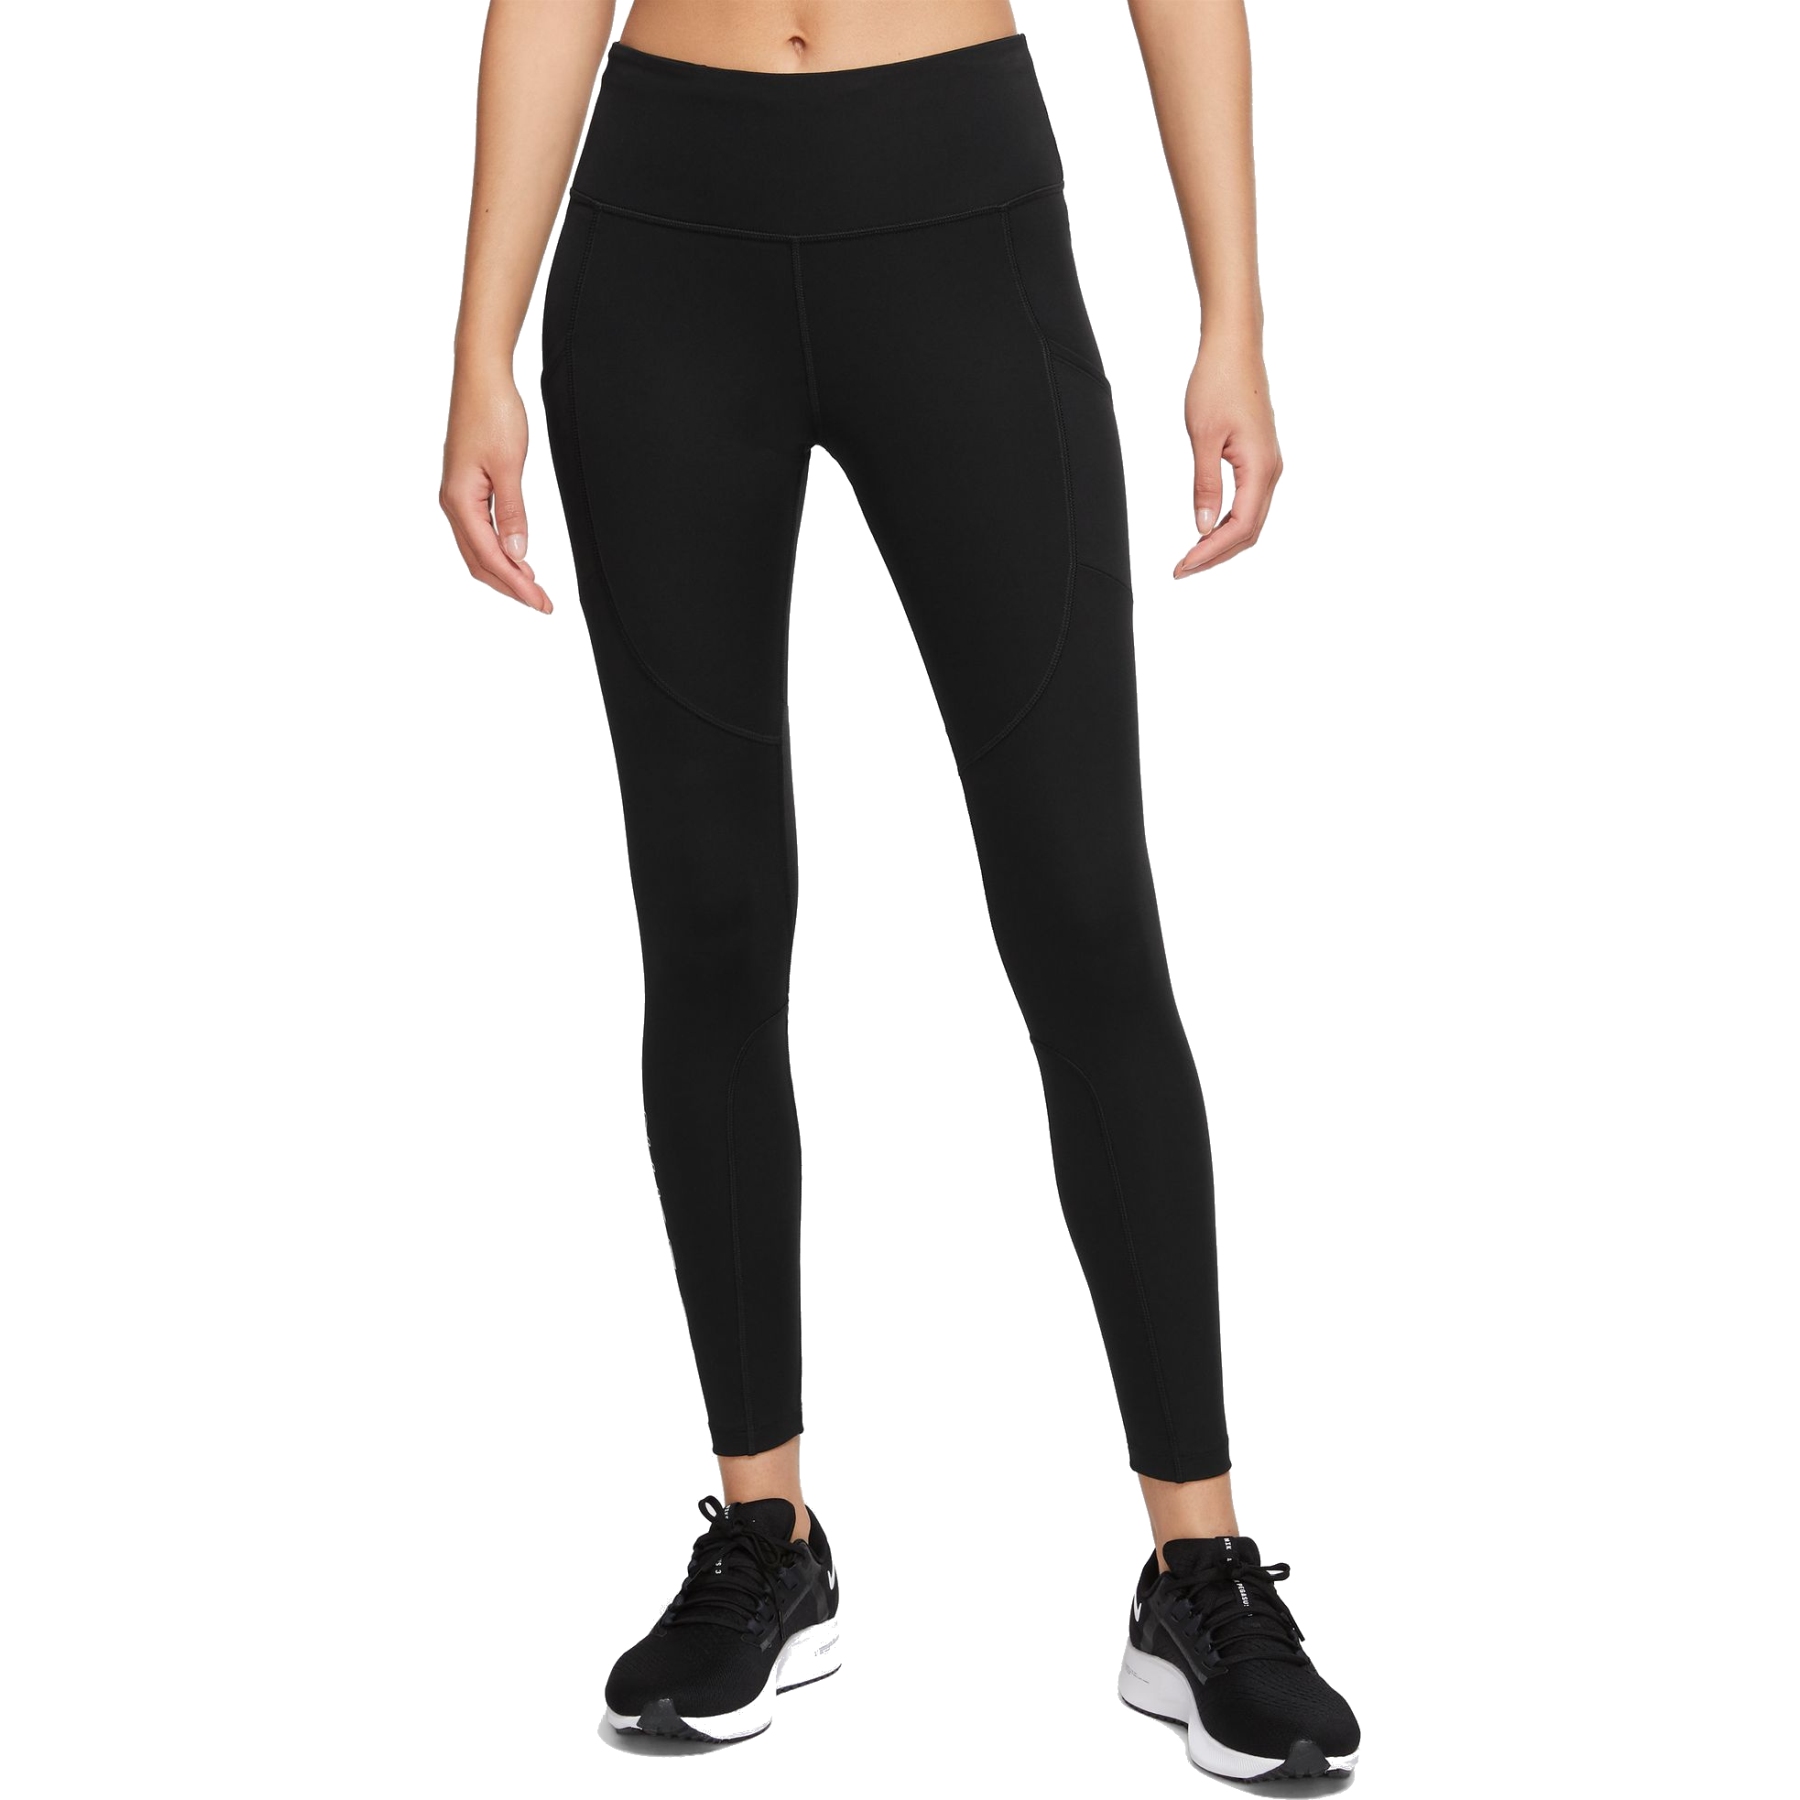 Nike Air Dri-FIT 7/8 Running Leggings Black/White/Irf